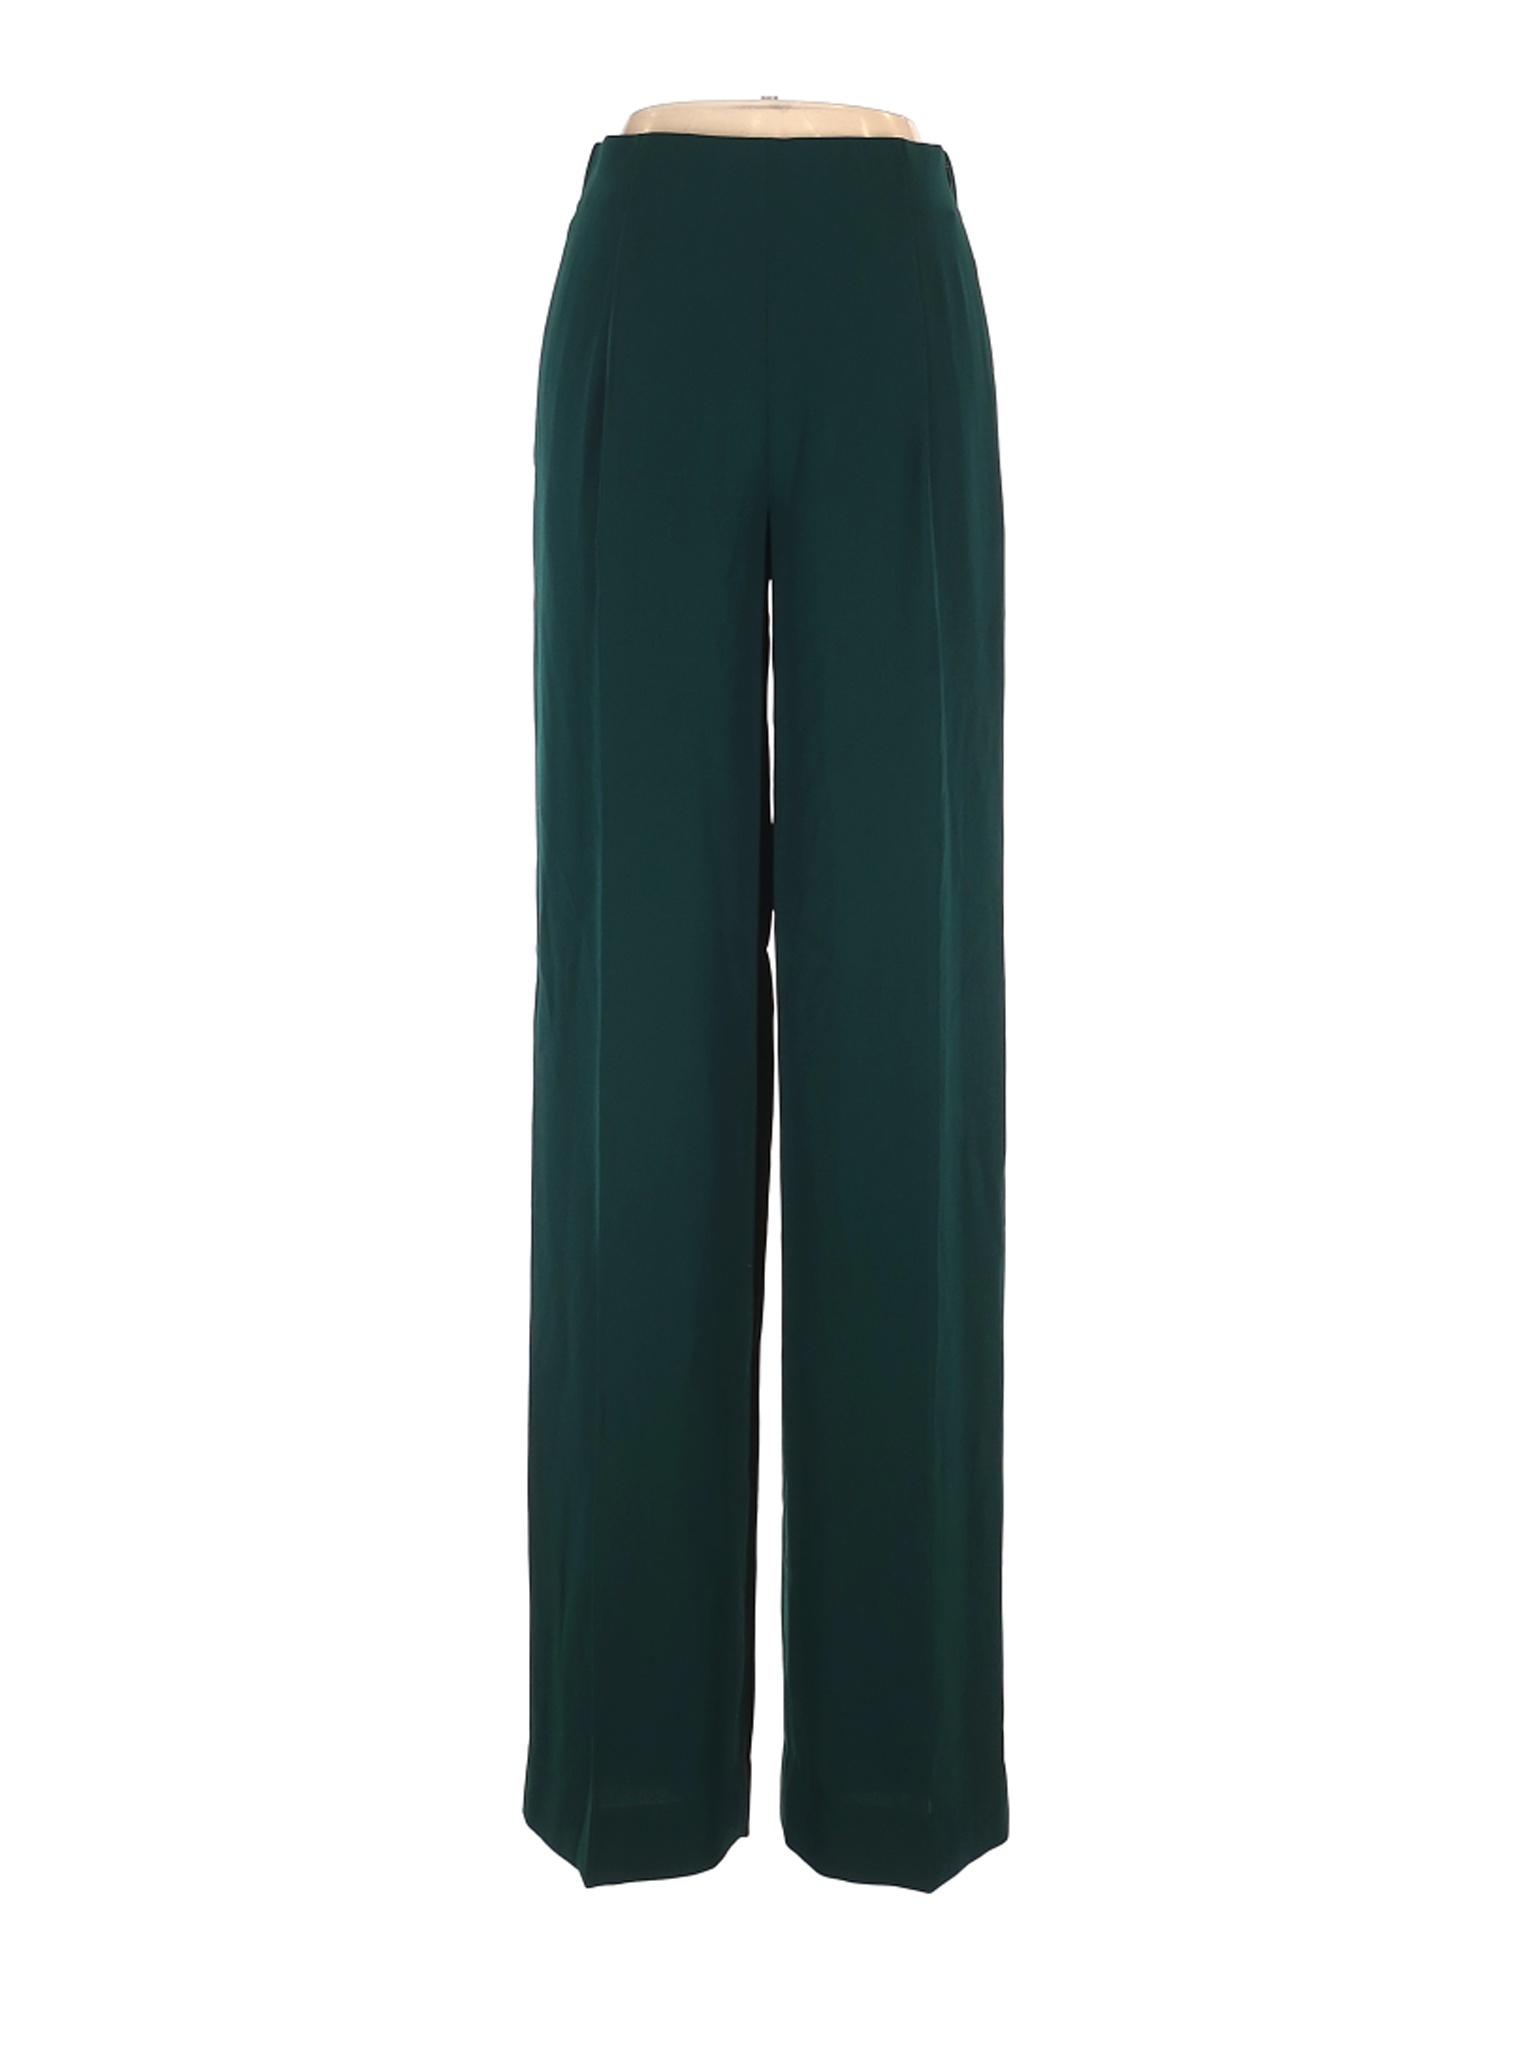 NWT J.Crew Women Green Dress Pants 0 | eBay